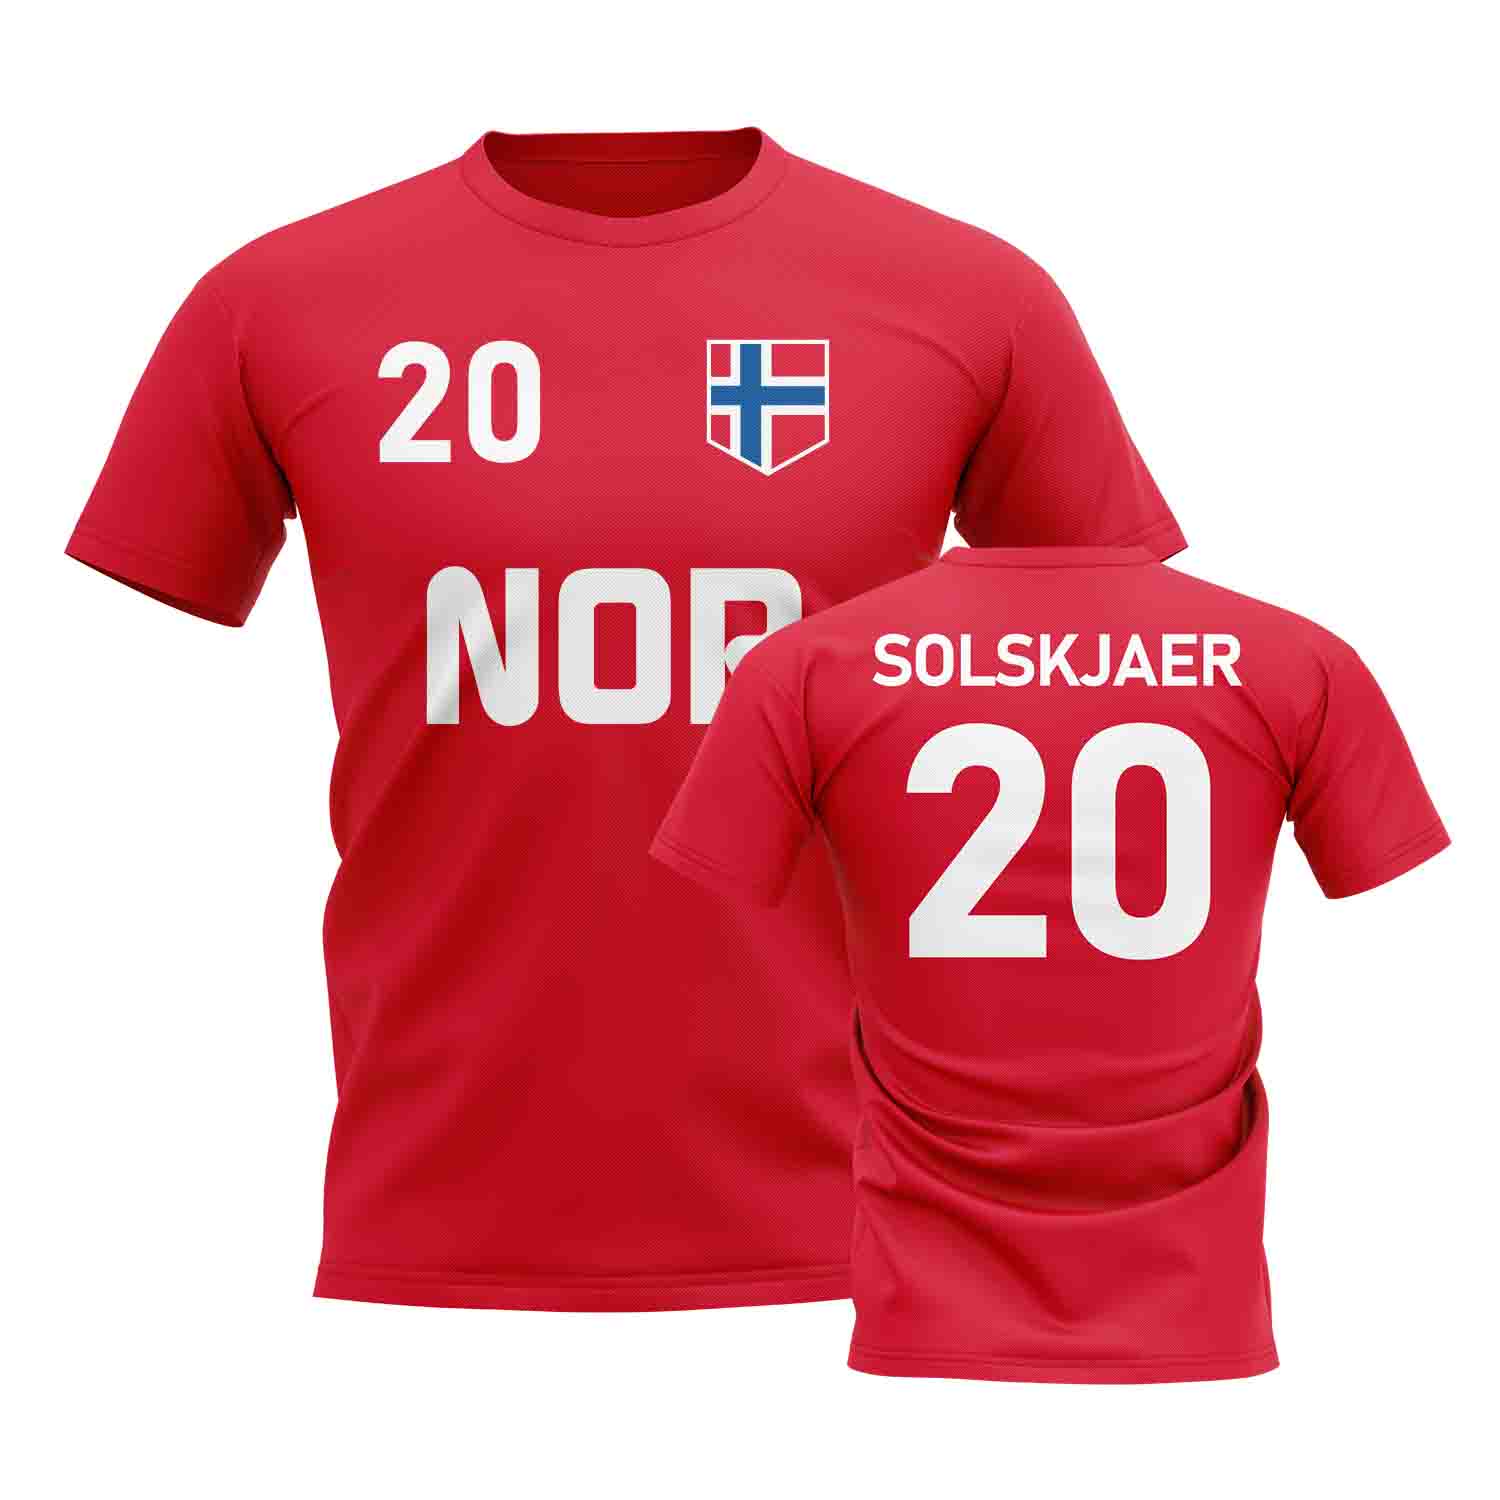 Ole Gunnar Solskj r Country Code Hero T-Shirt (Red)